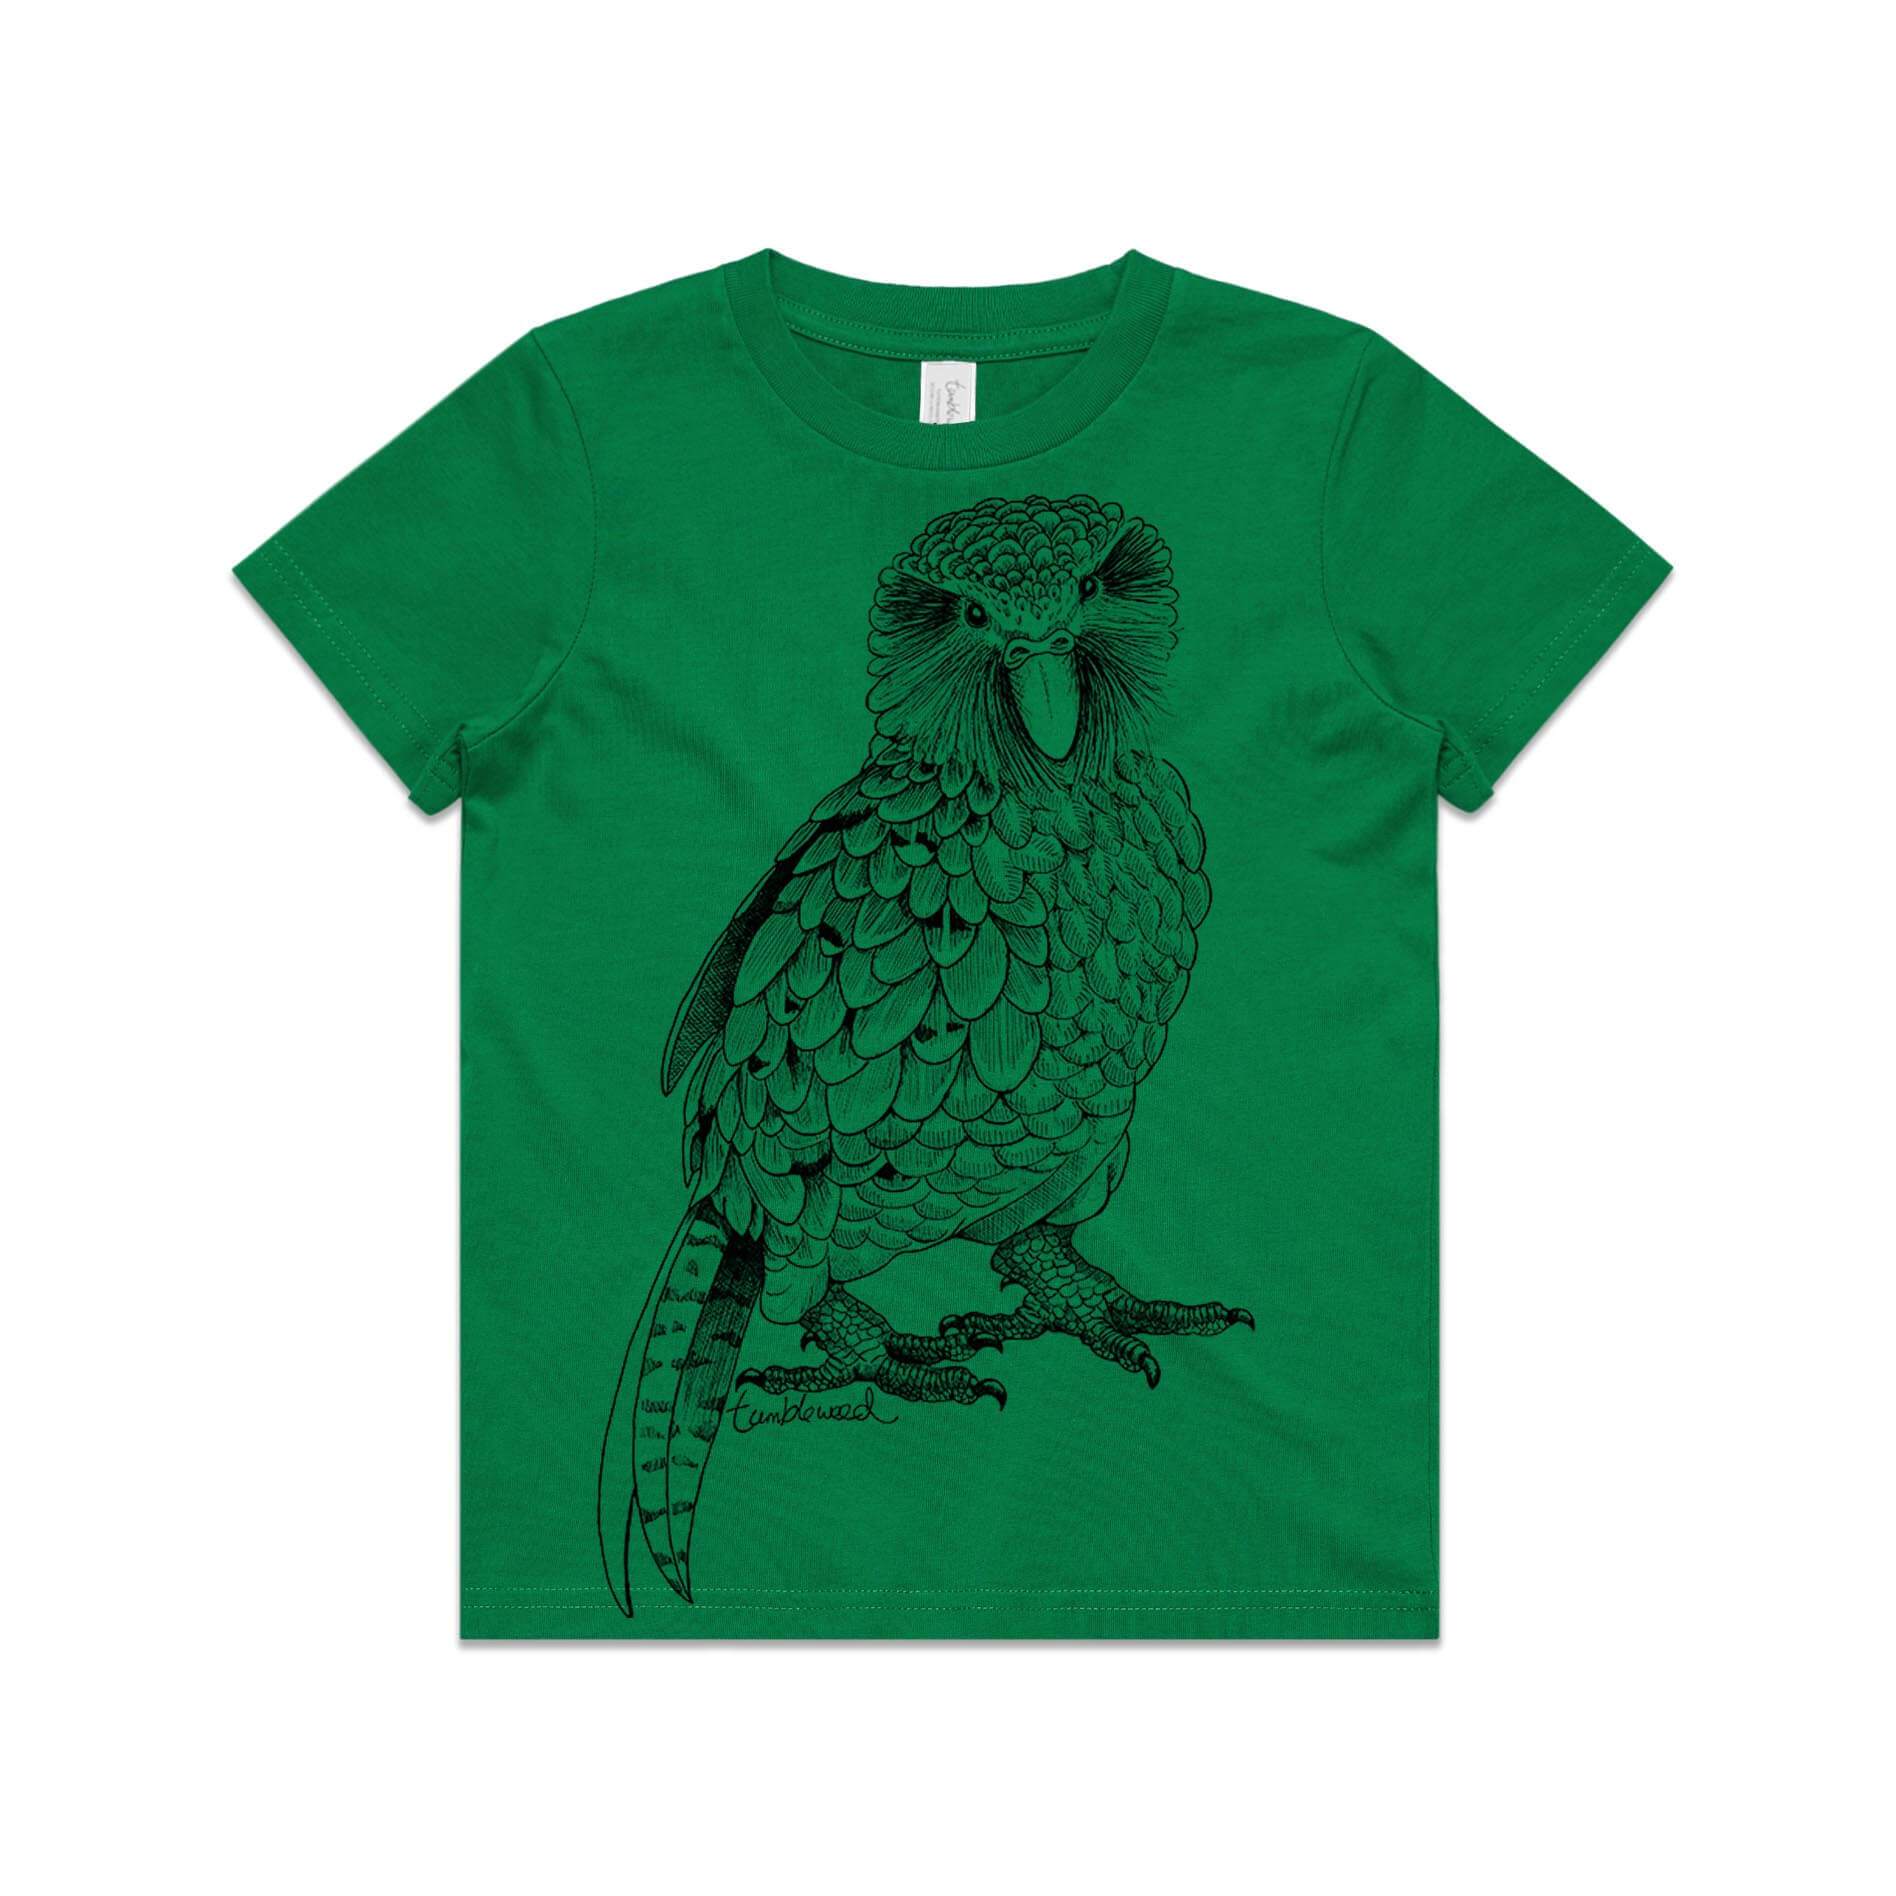 Green, cotton kids' t-shirt with screen printed Kids Kākāpō design.